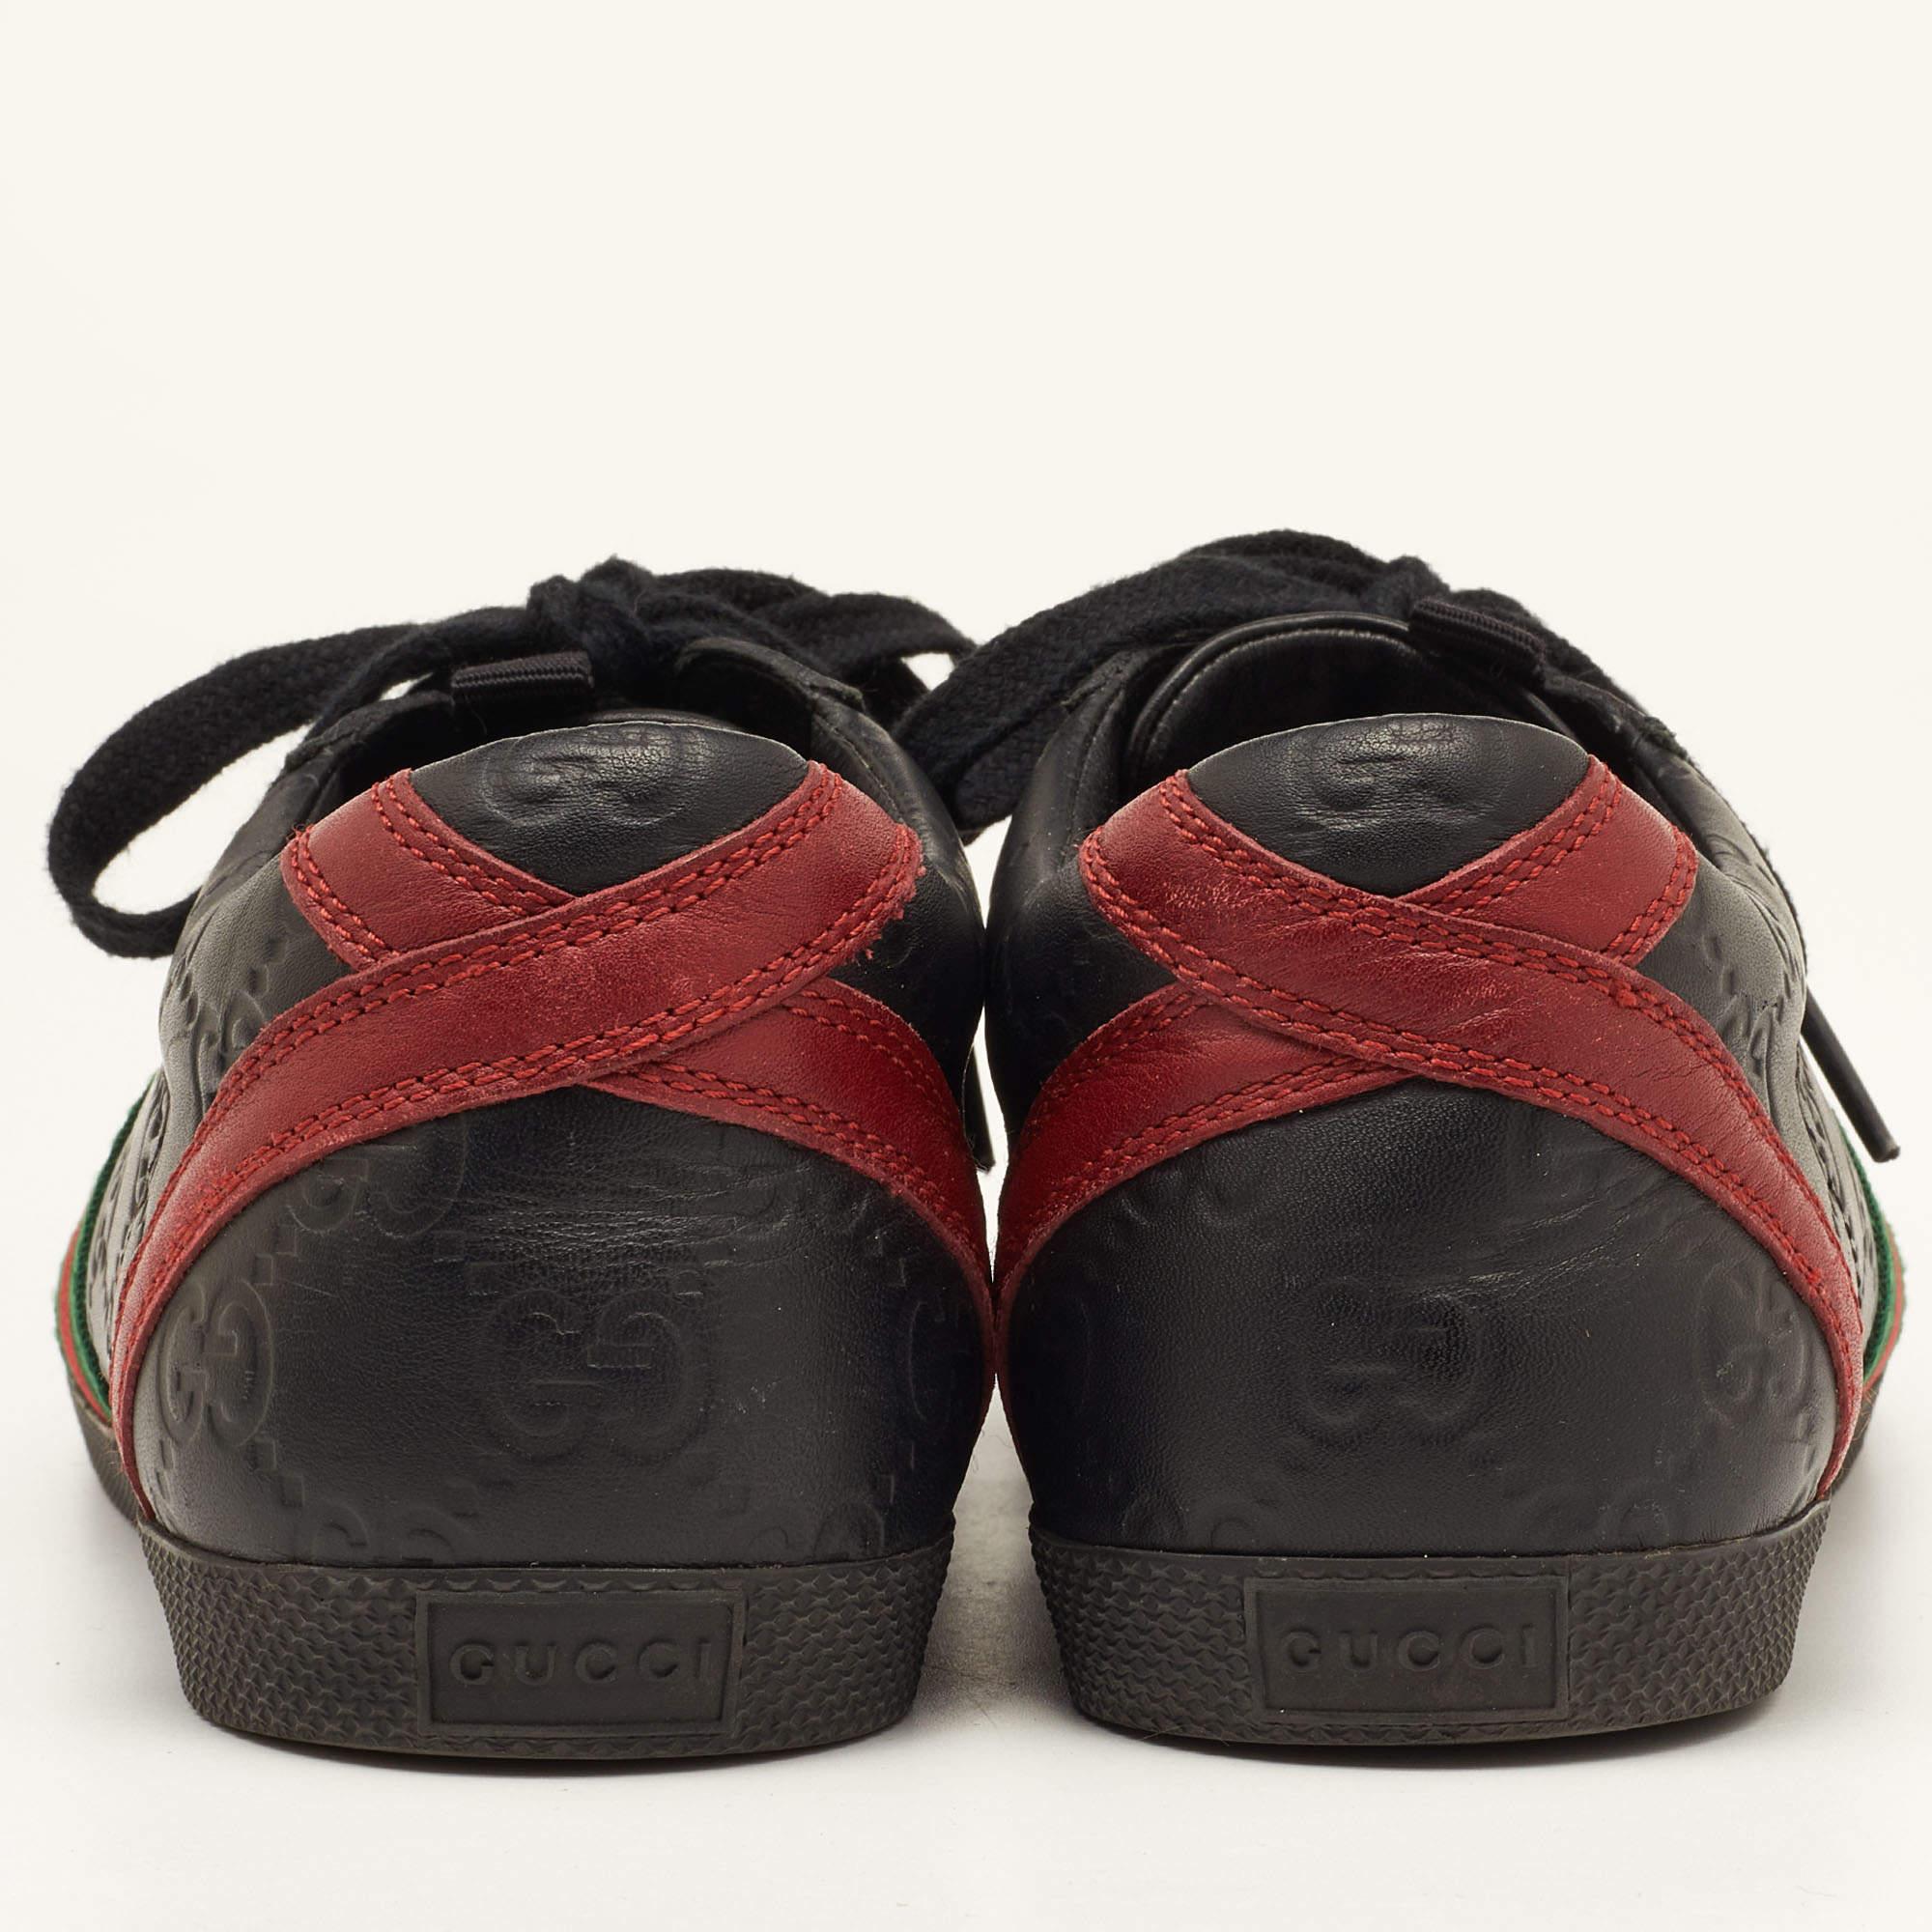 Gucci Black Guccissima Leather Web Ace Sneakers Size 37 2